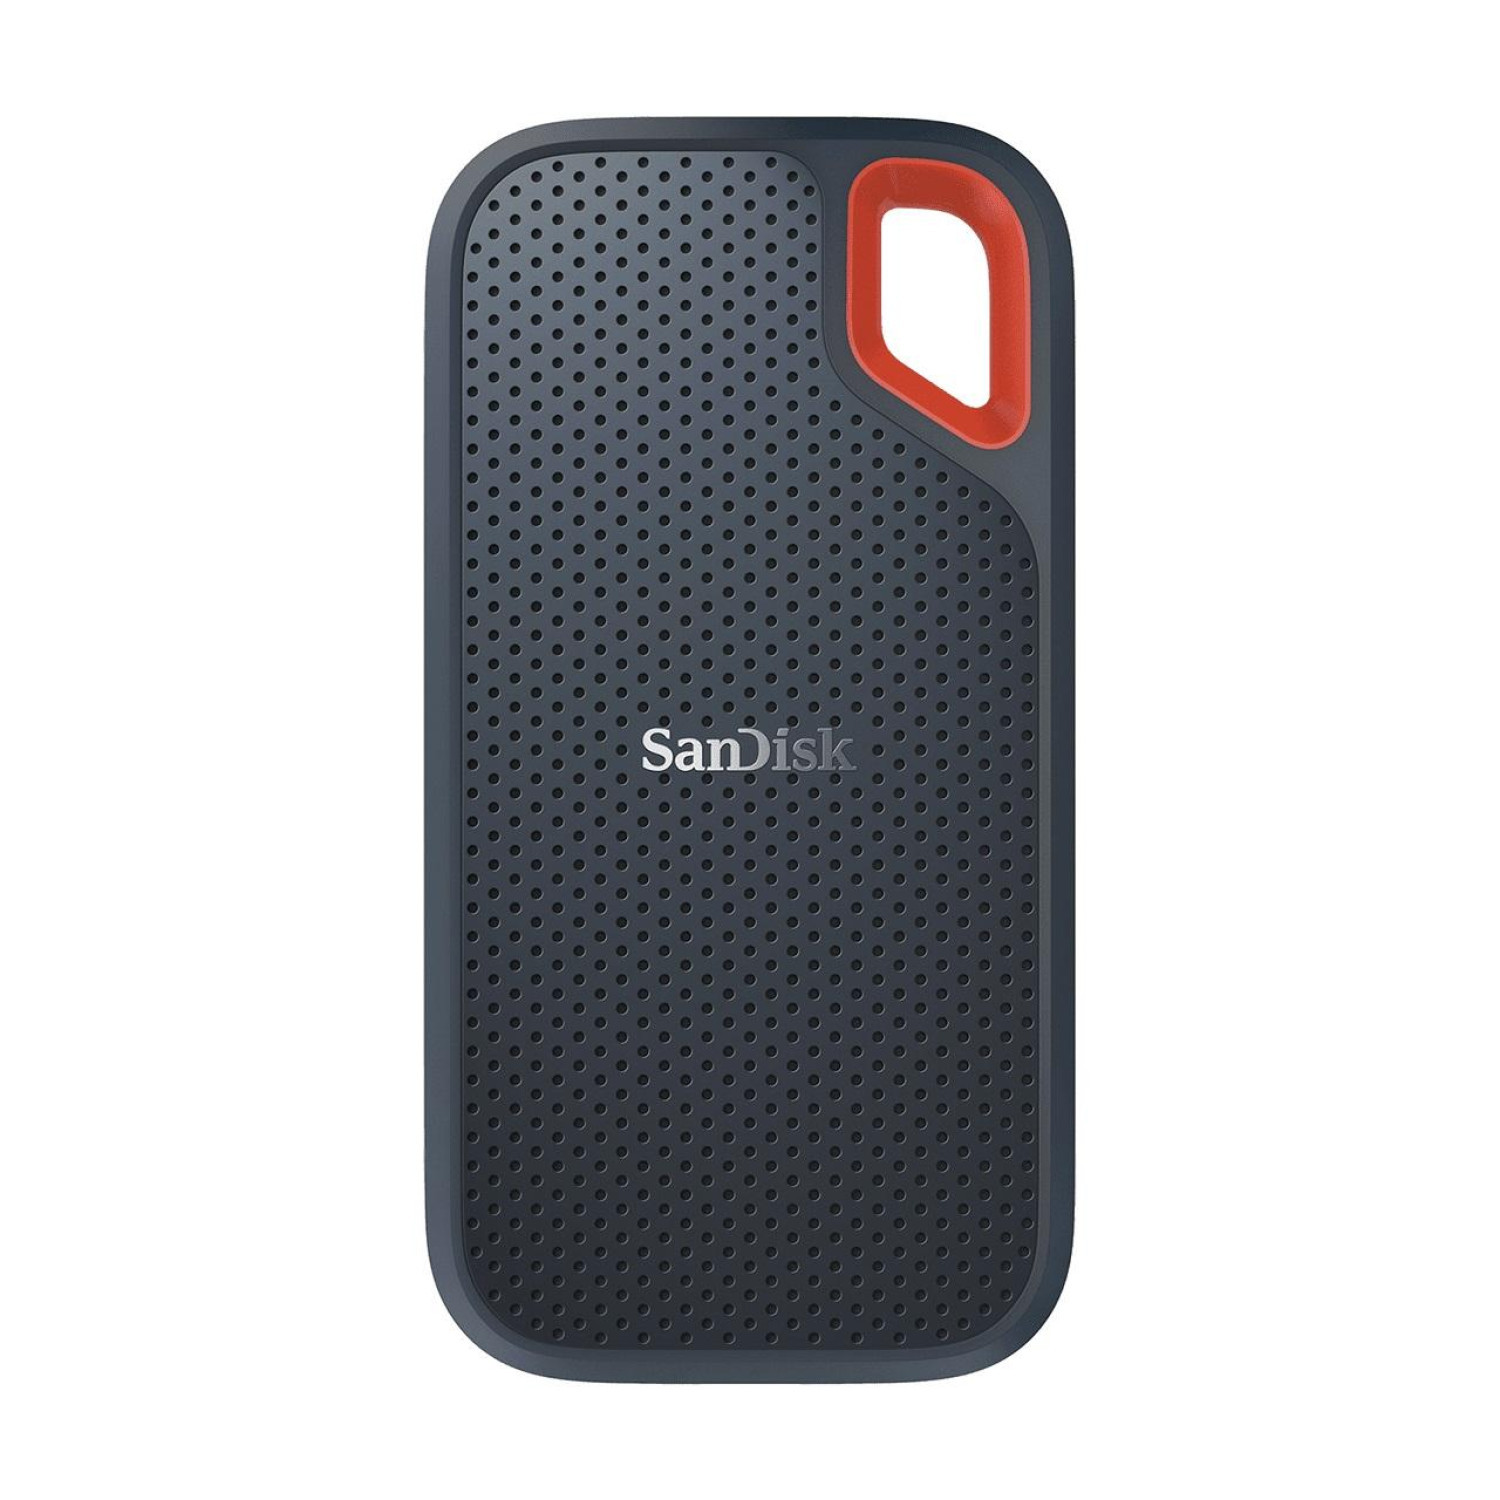 Външен SSD SanDisk Extreme Portable, 500GB, USB 3.1 Gen2 Type-C, Черен